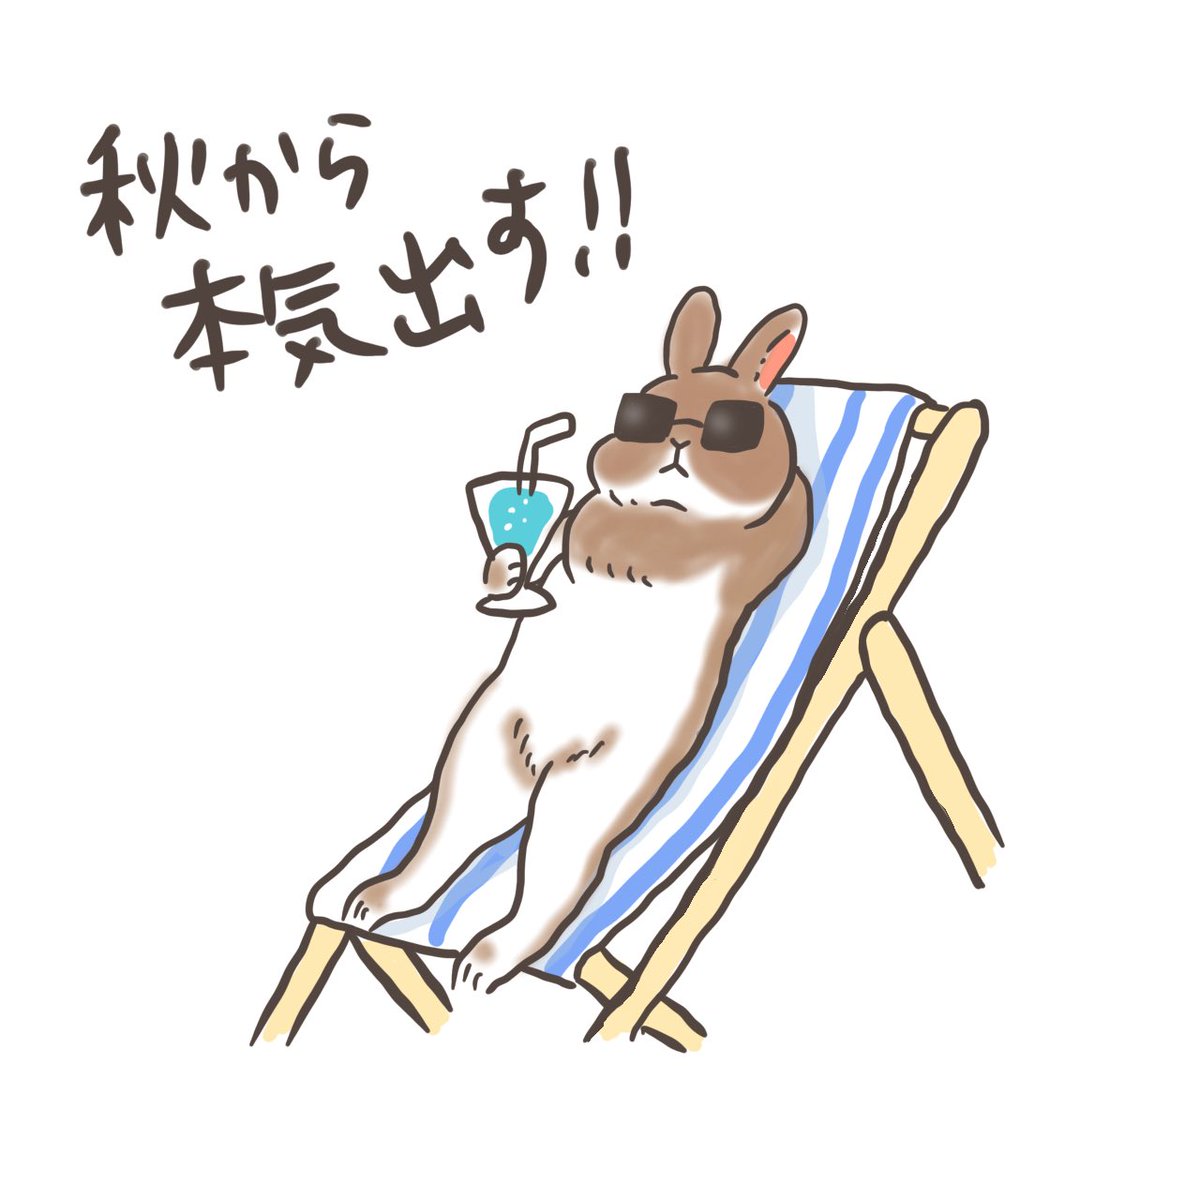 no humans sunglasses white background rabbit drink simple background animal focus  illustration images